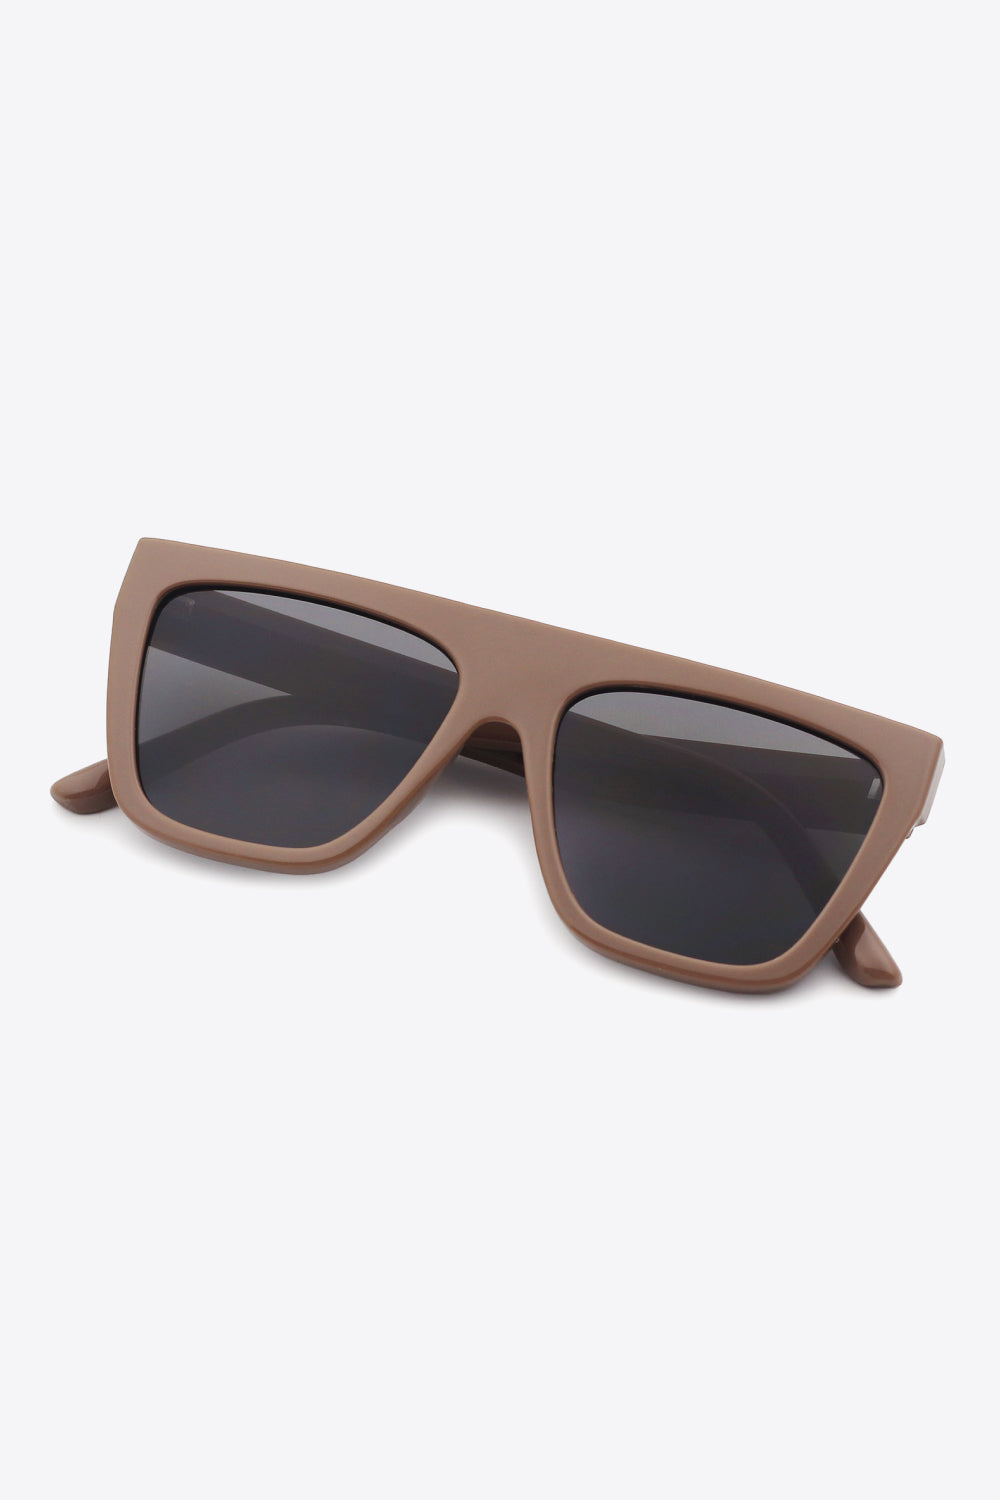 UV400 Polycarbonate Wayfarer Sunglasses - BEAUTY COSMOTICS SHOP